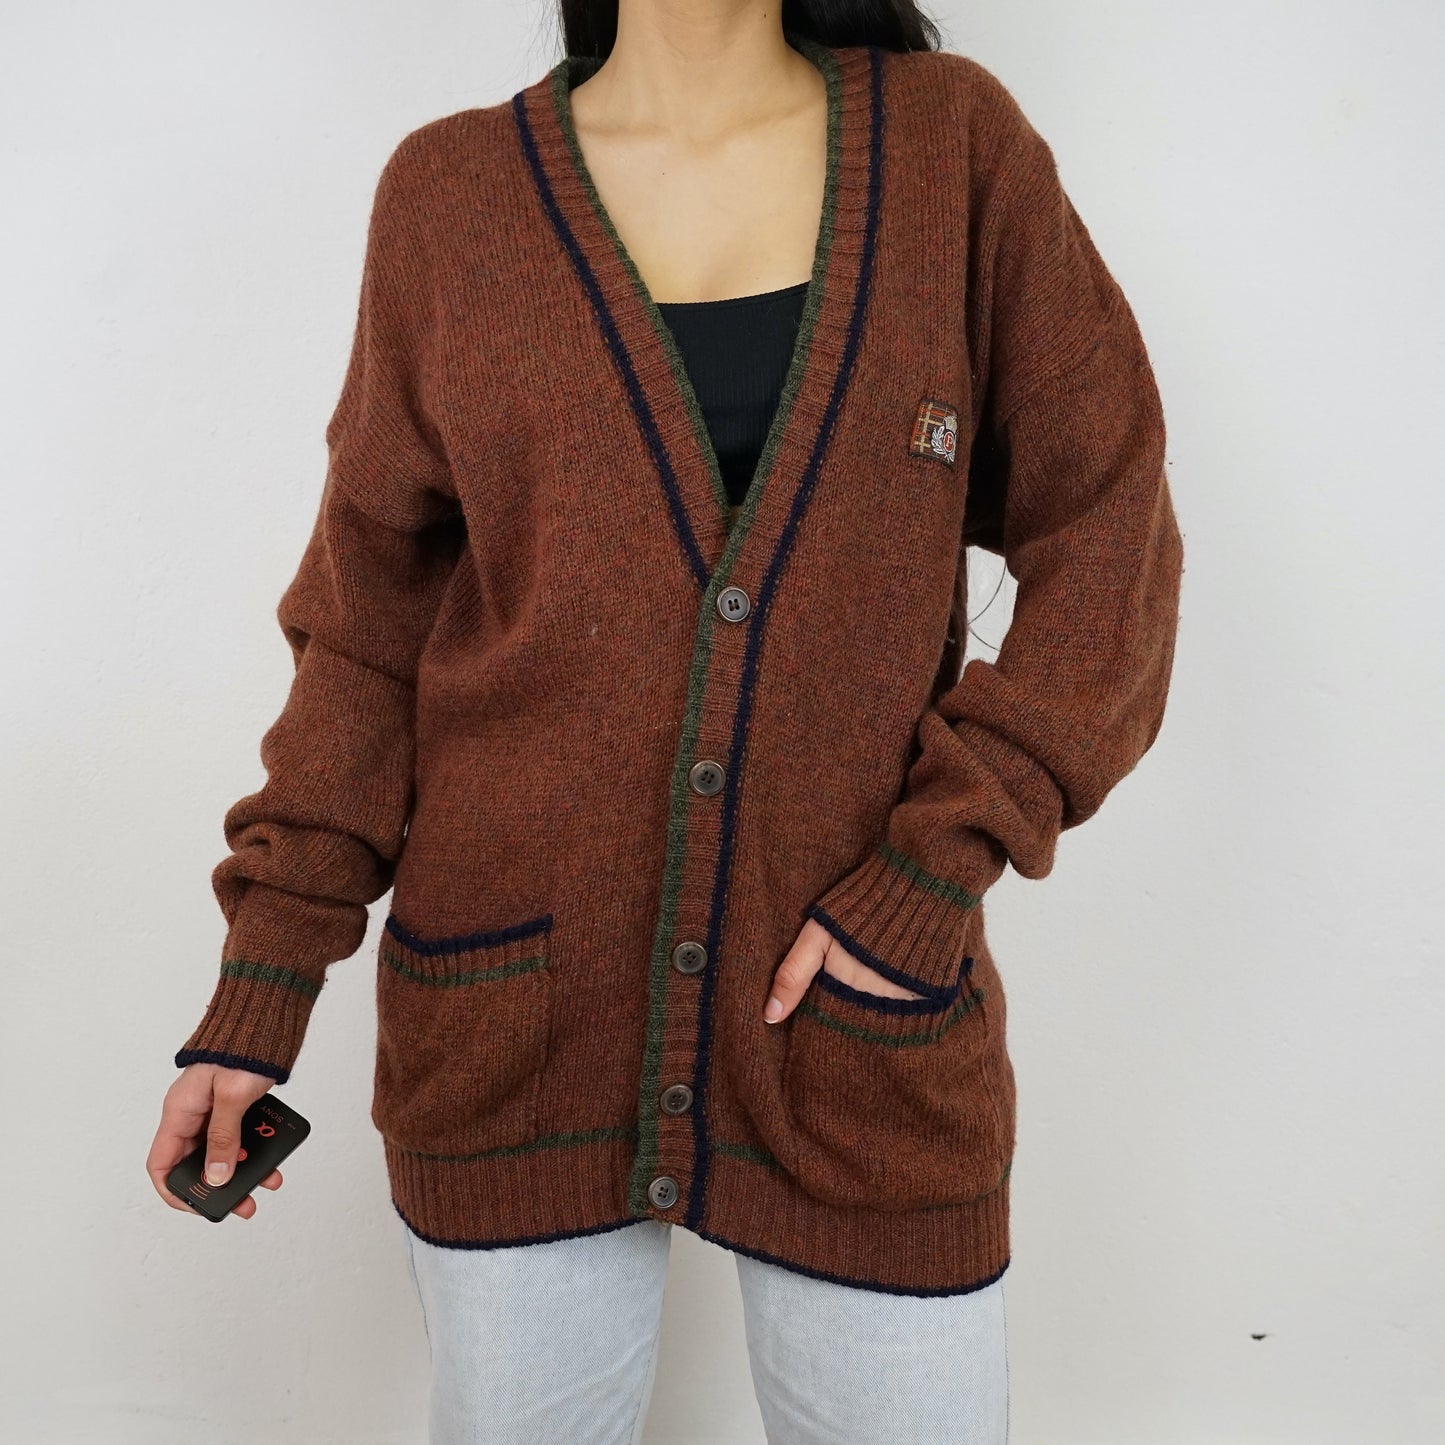 Vintage pure wool Cardigan size L-XL